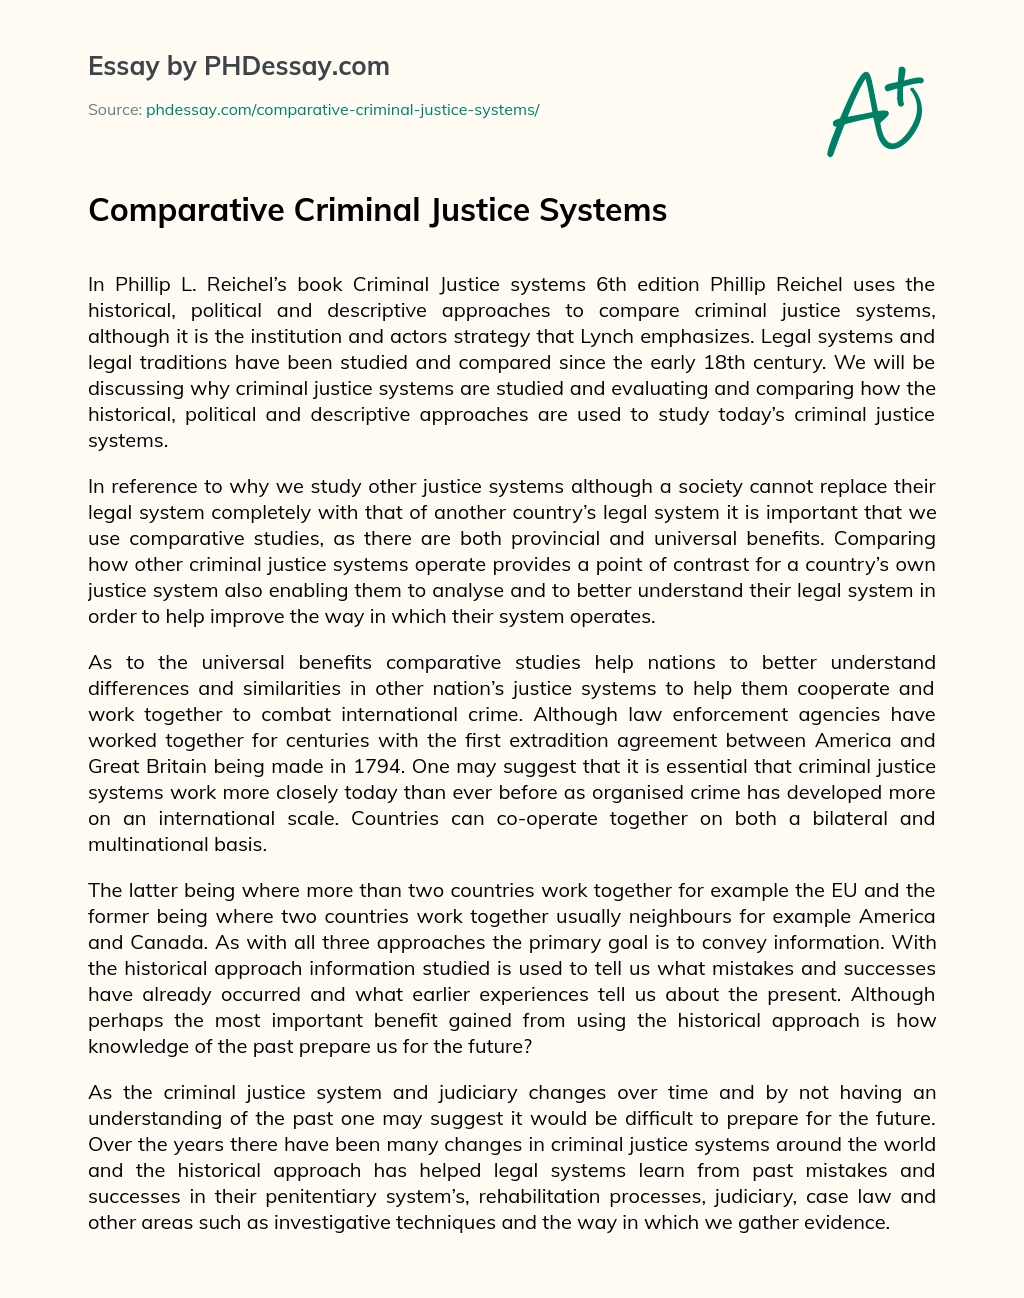 Comparative Criminal Justice Systems essay